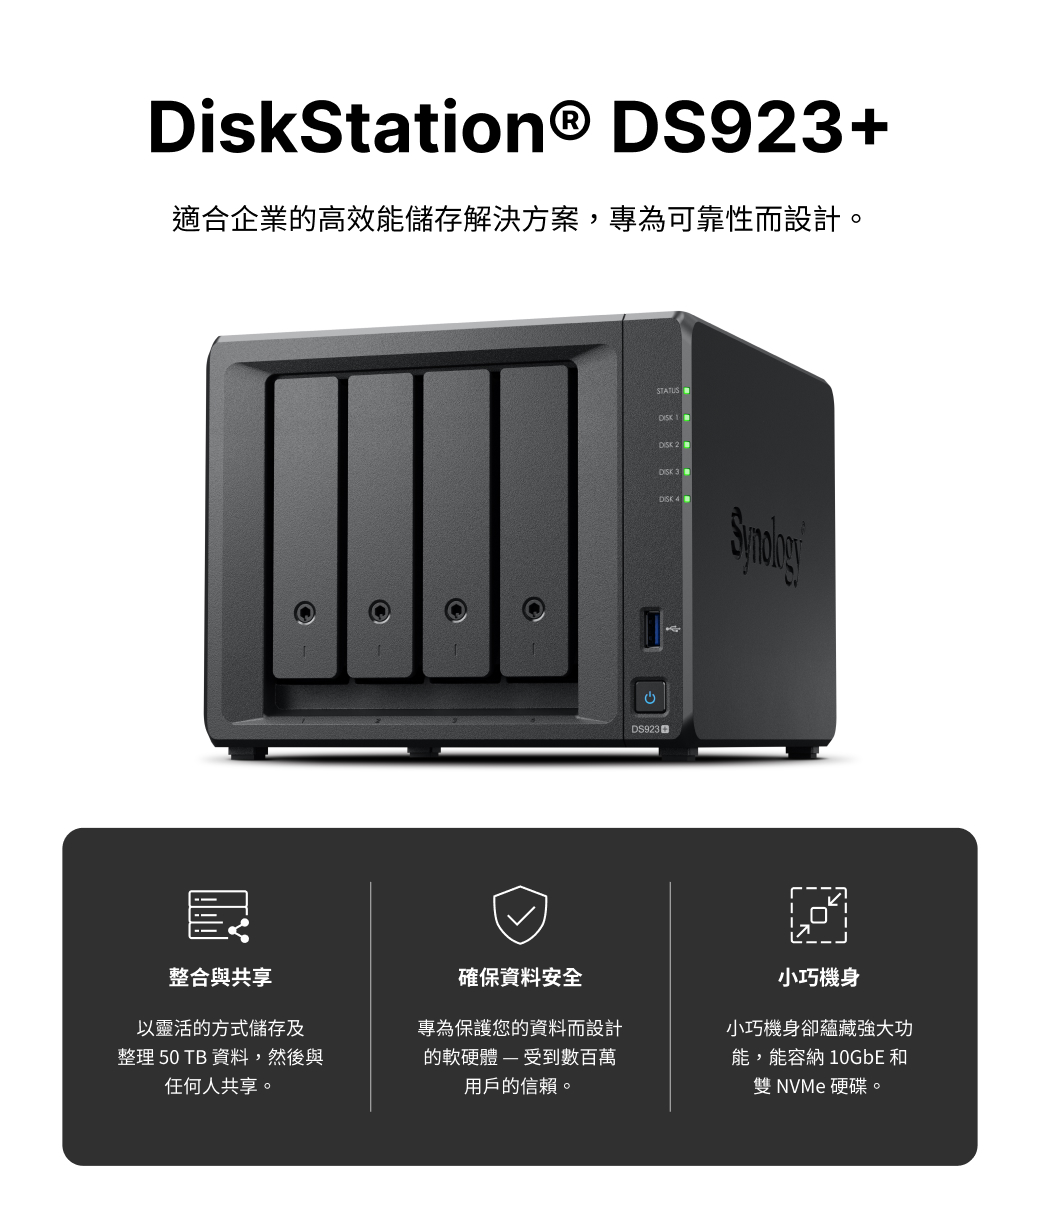 DiskStation® DS923+適合企業的高效能儲存解決方案,專為可靠性而設計。整合與共享以靈活的方式儲存及整理 50 TB 資料,然後與任何人共享。STATUS  2 3DS923確保資料安全專為保護您的資料而設計的軟硬體  受到數百萬用戶的信賴。小巧機身小巧機身卻蘊藏強大功能,能容納 10GbE 和雙NVMe 硬碟。